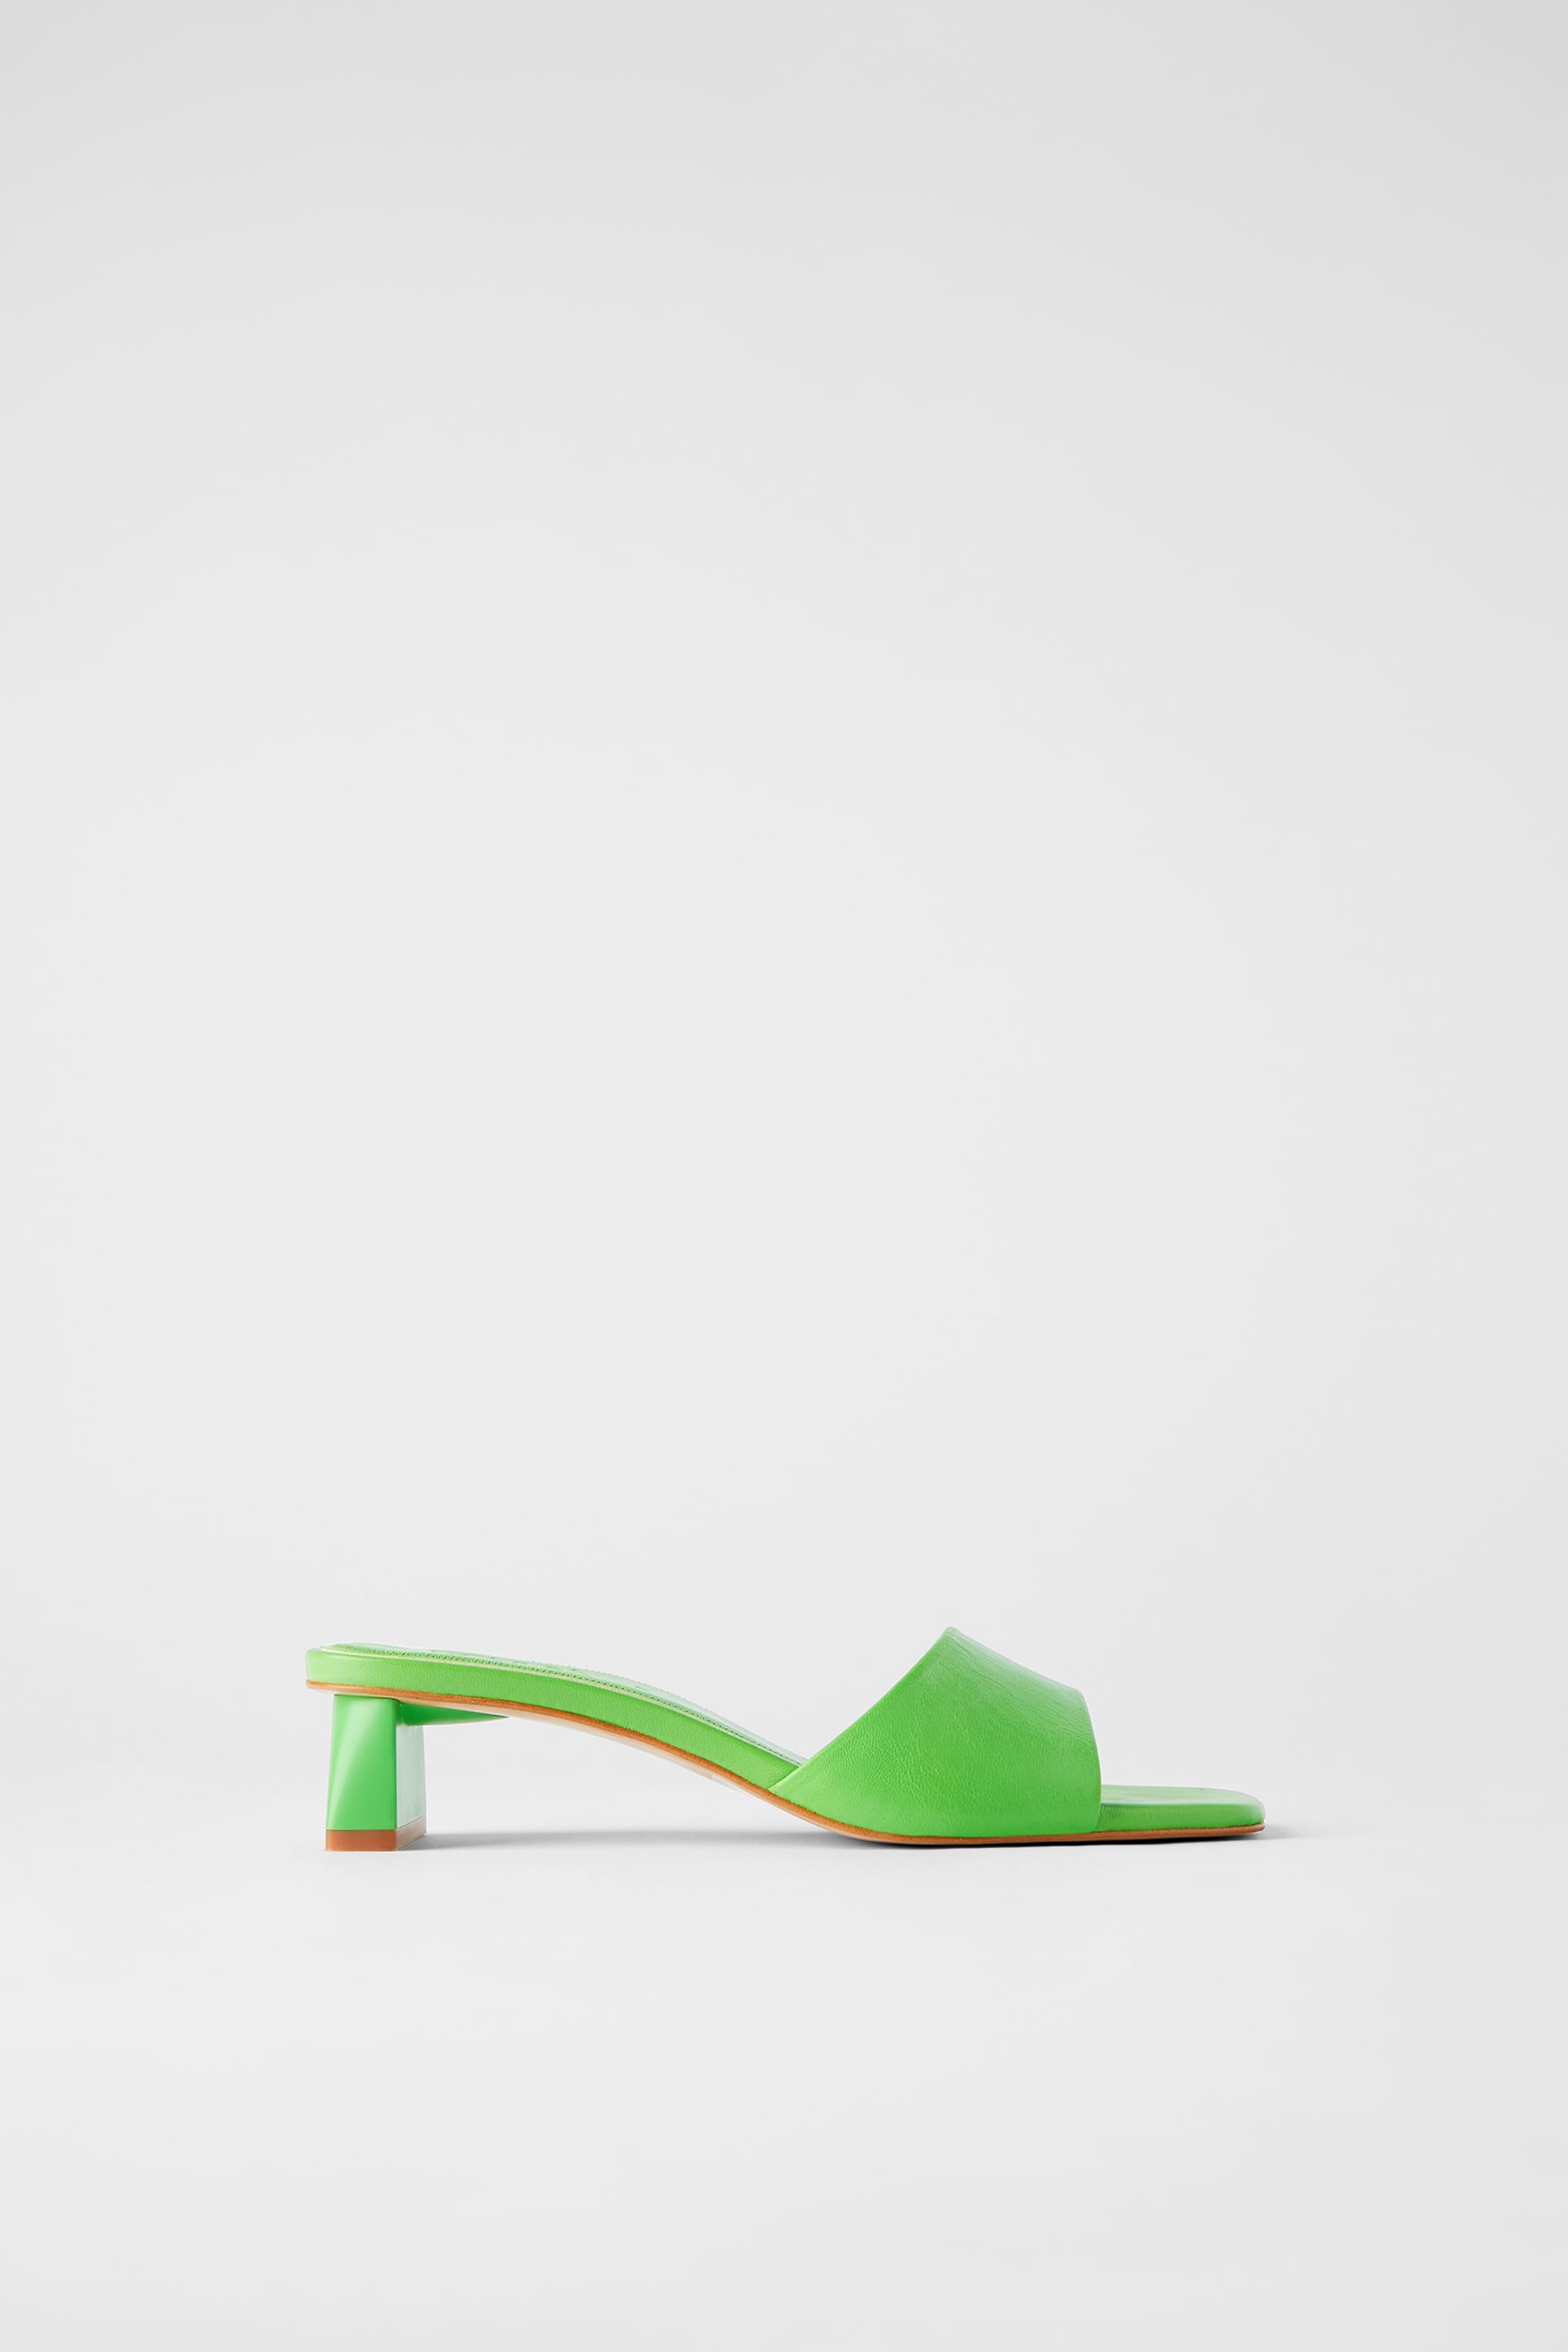 zara lime green shoes